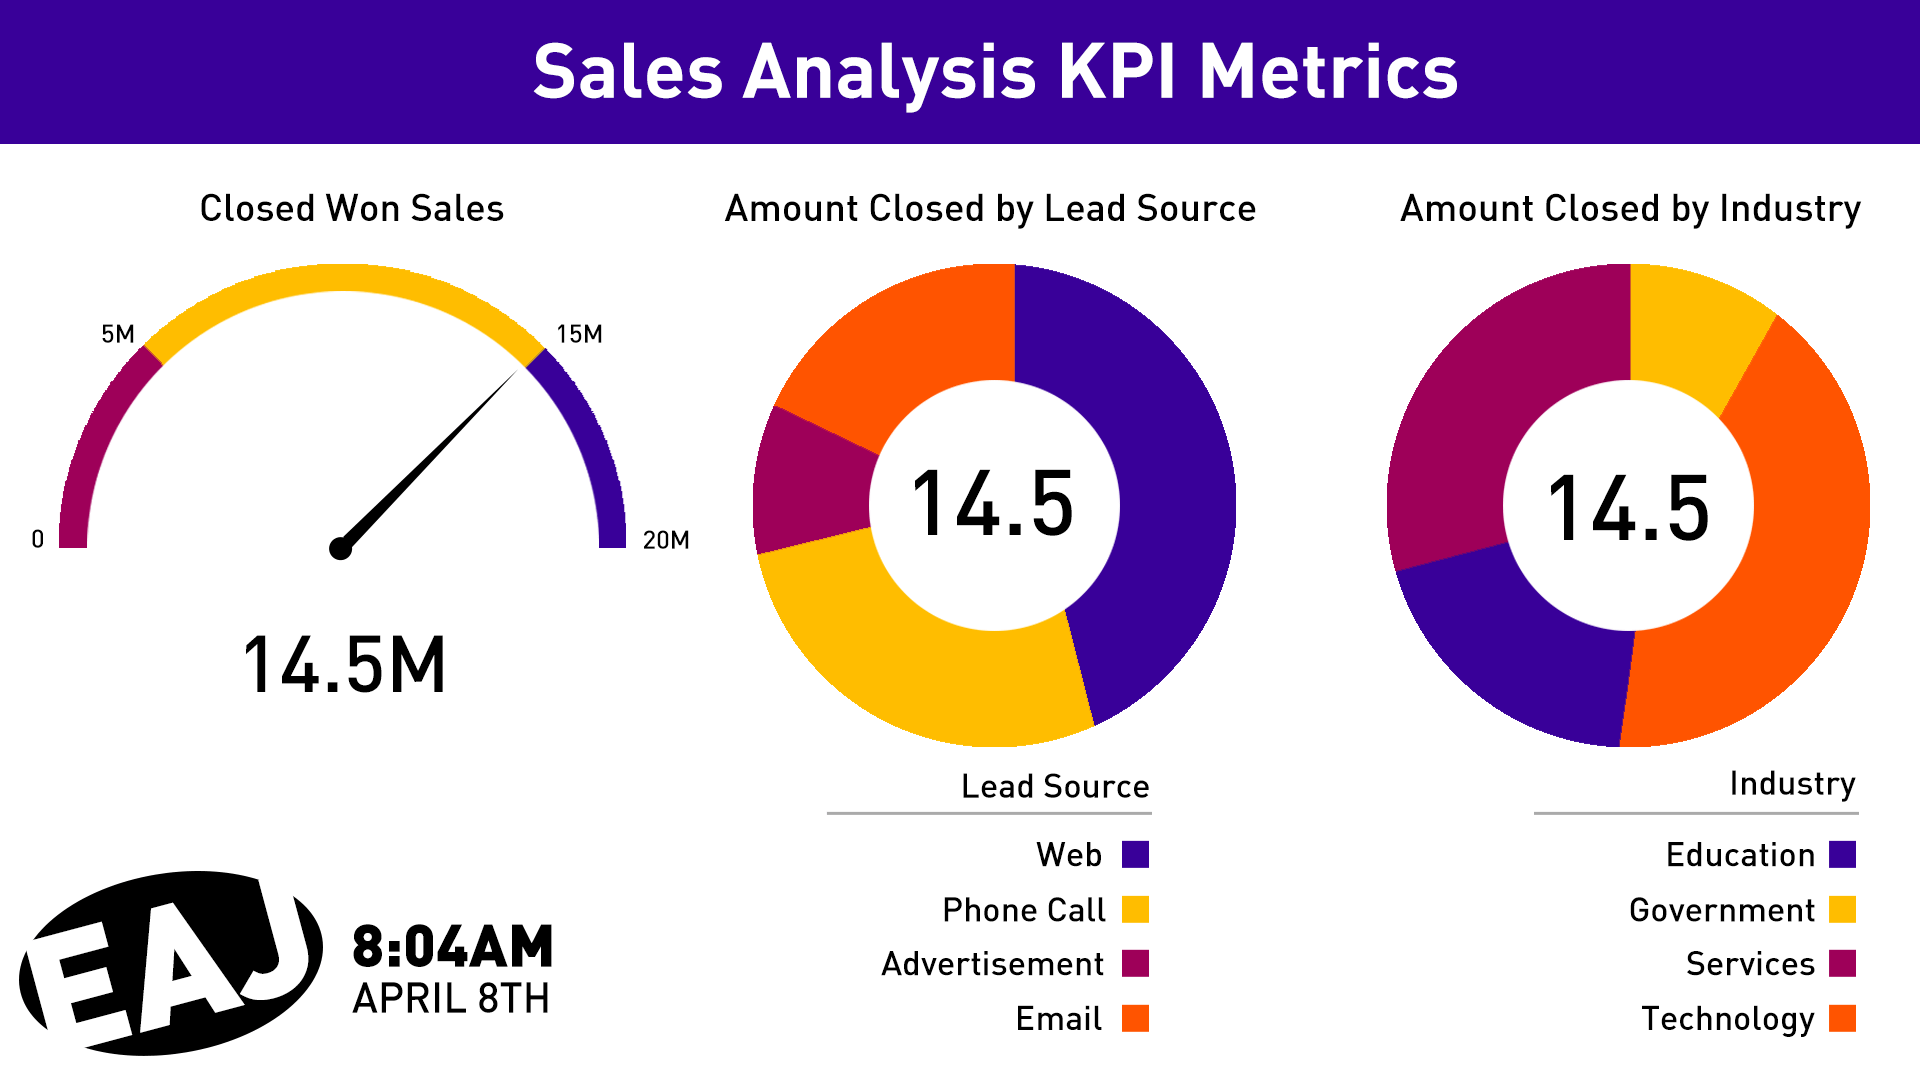 Purple and white corporate digital signage displaying sales KPI Metrics